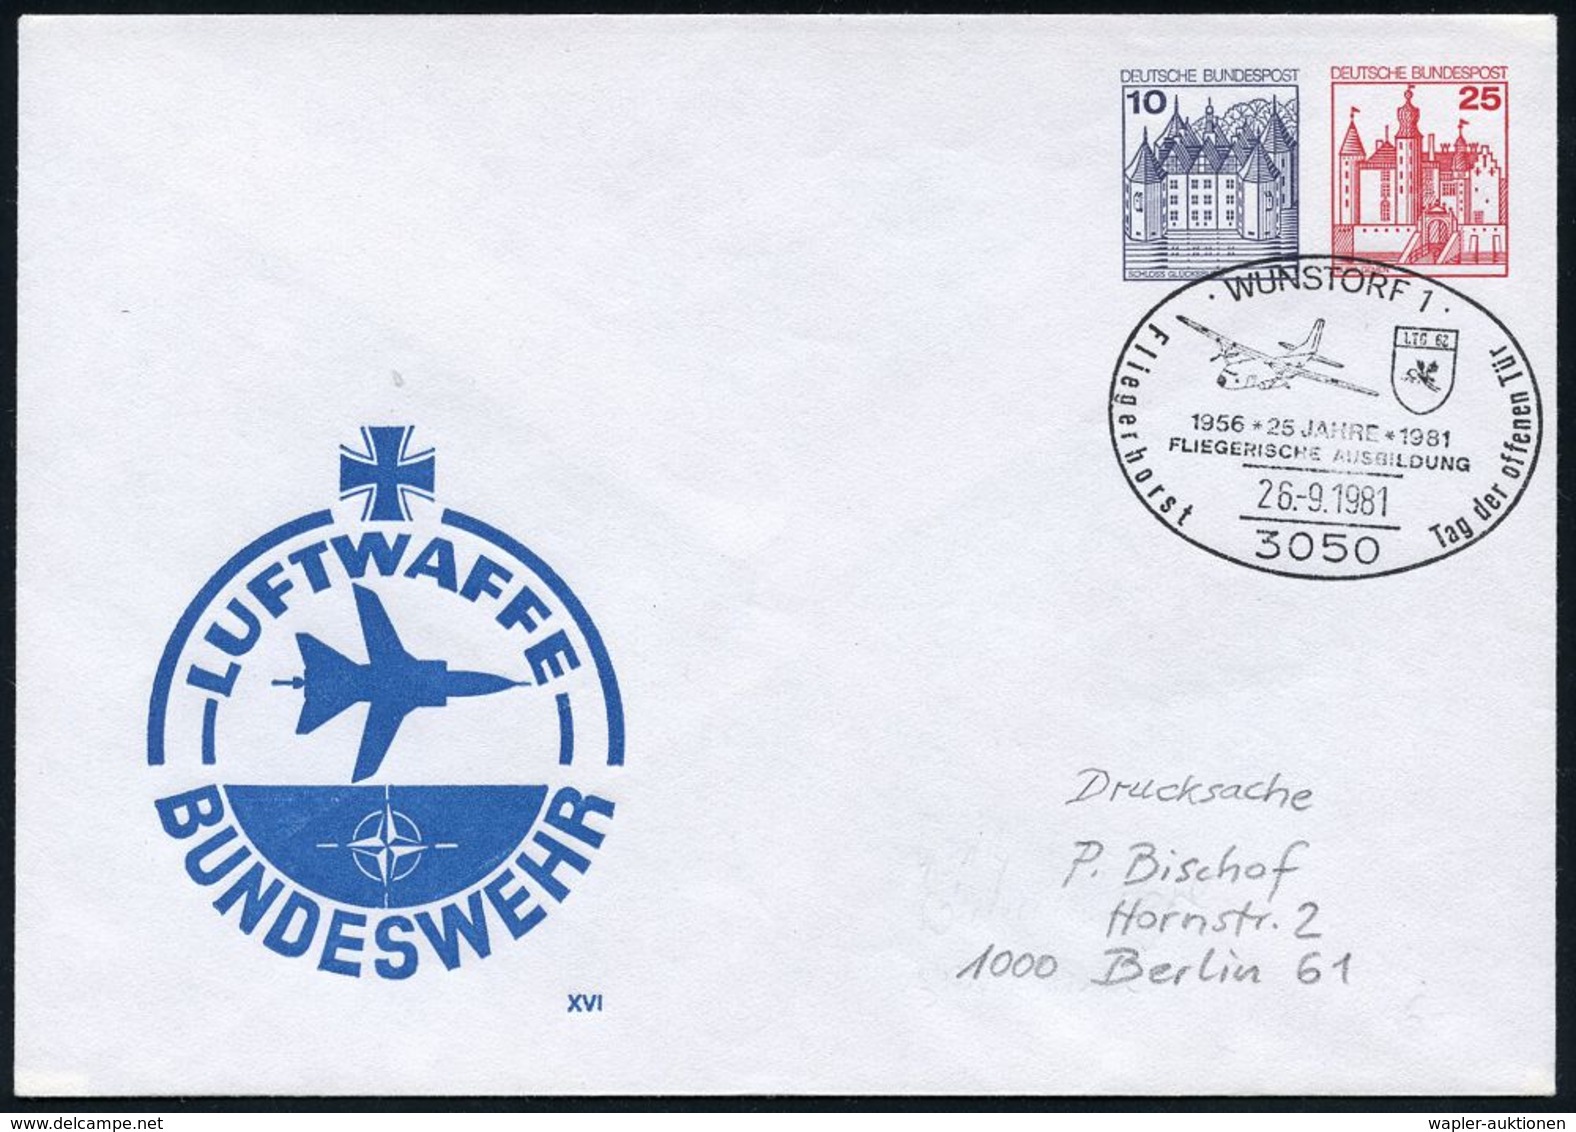 FLIEGERHORST / MILITÄRFLUGHAFEN : 3050 WUNSTORF 1/ Fliegerhorst Tag Der Offenen Tür.. 1981 (26.9.) SSt = Transall-Transp - Flugzeuge